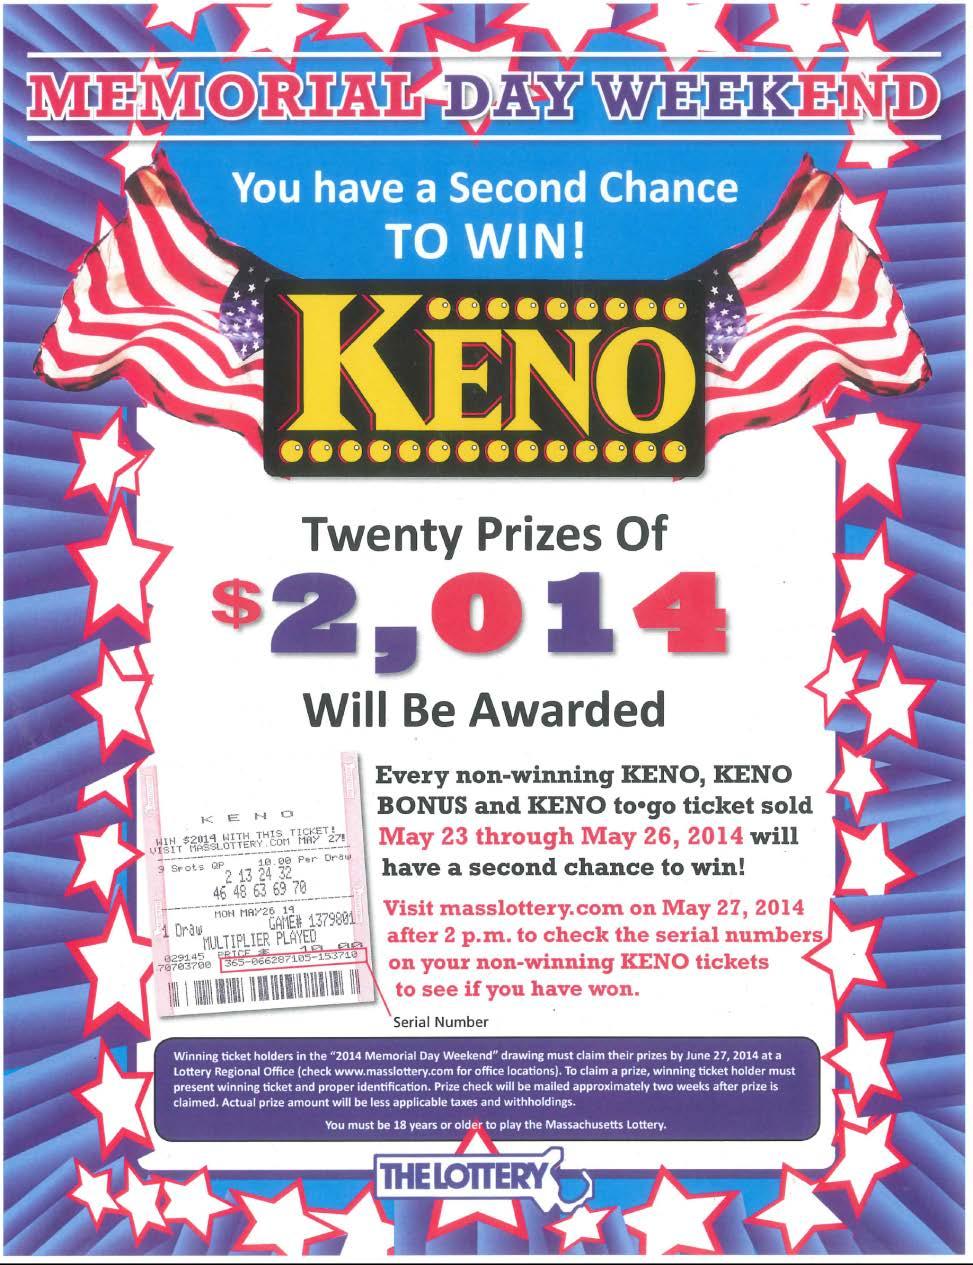 Every non-winning KENO, KENO Bonus & KENO-to-Go ticket sold from May 23 rd through May 26 th will